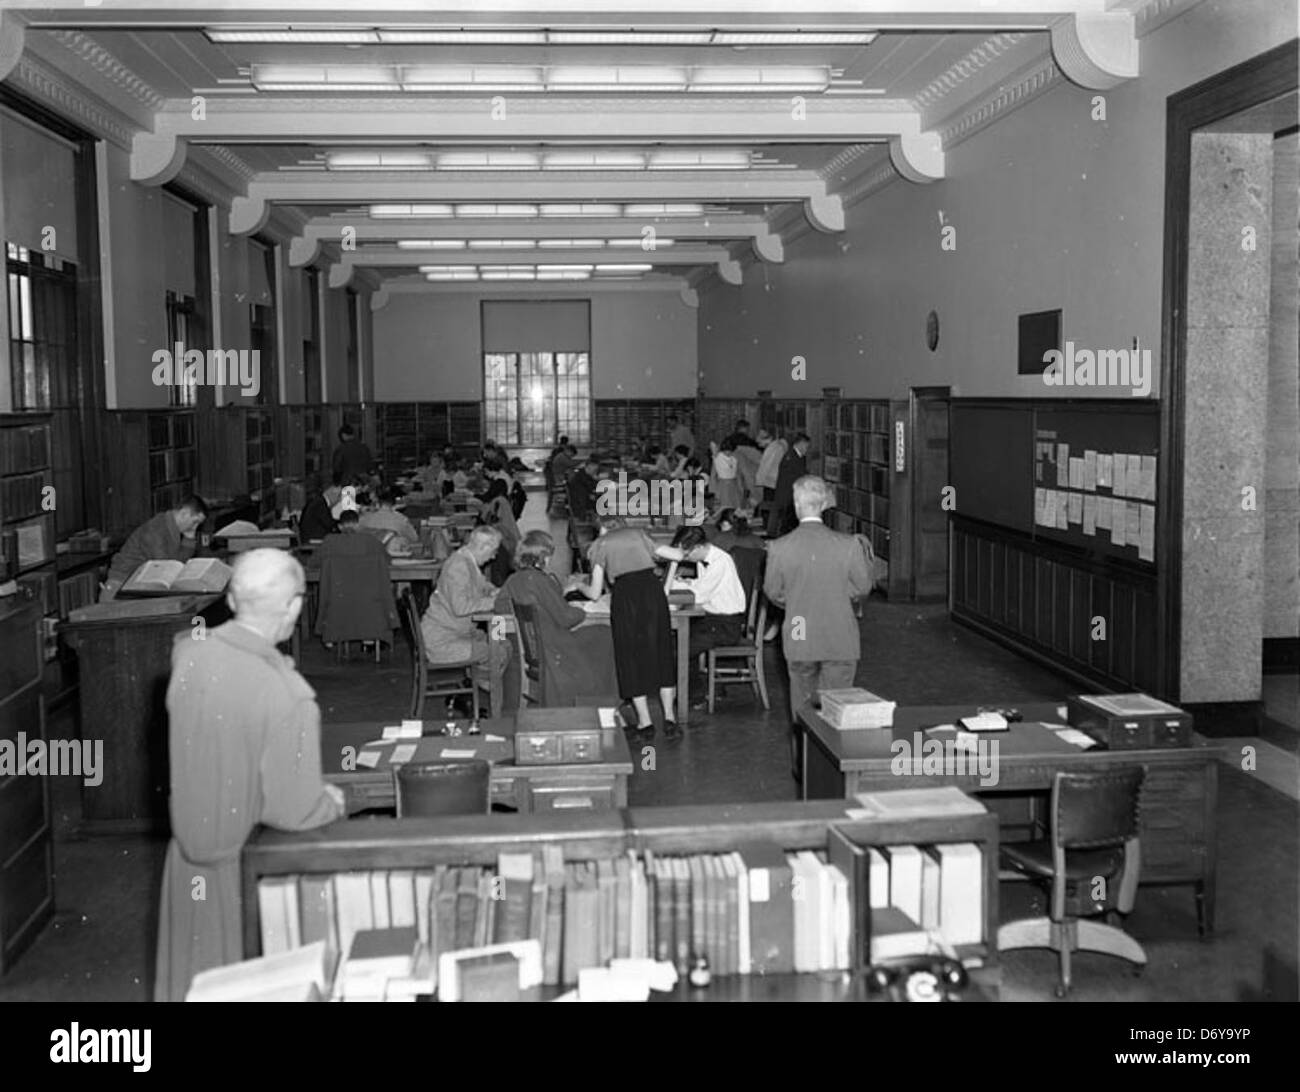 City, public library Stock Photo